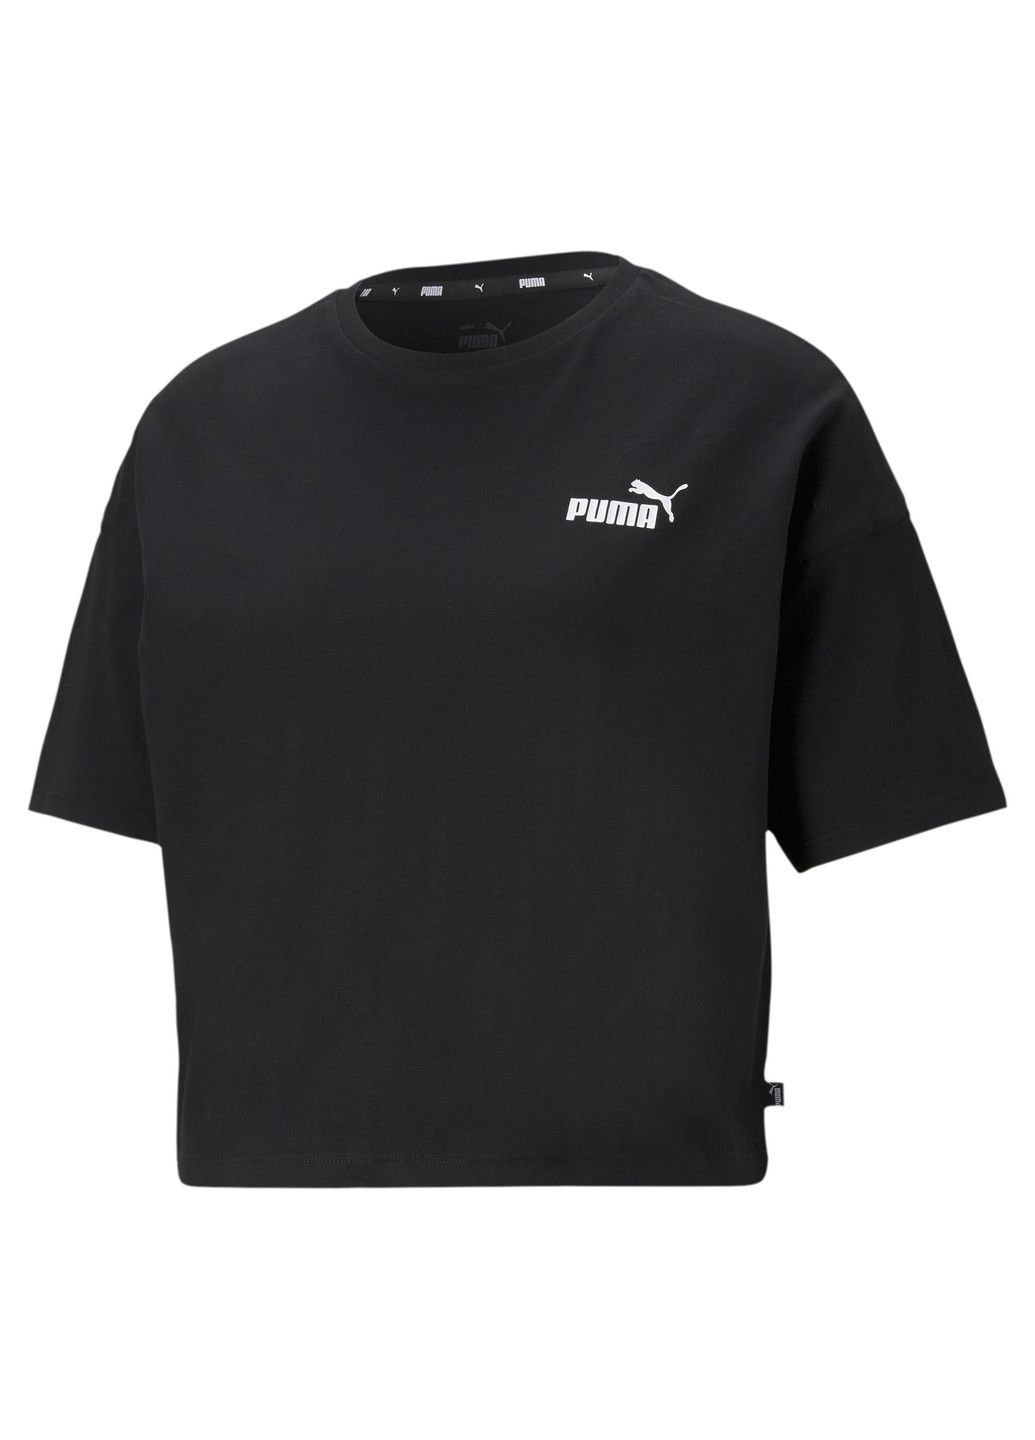 Черная всесезон футболка essentials cropped small logo women's tee Puma